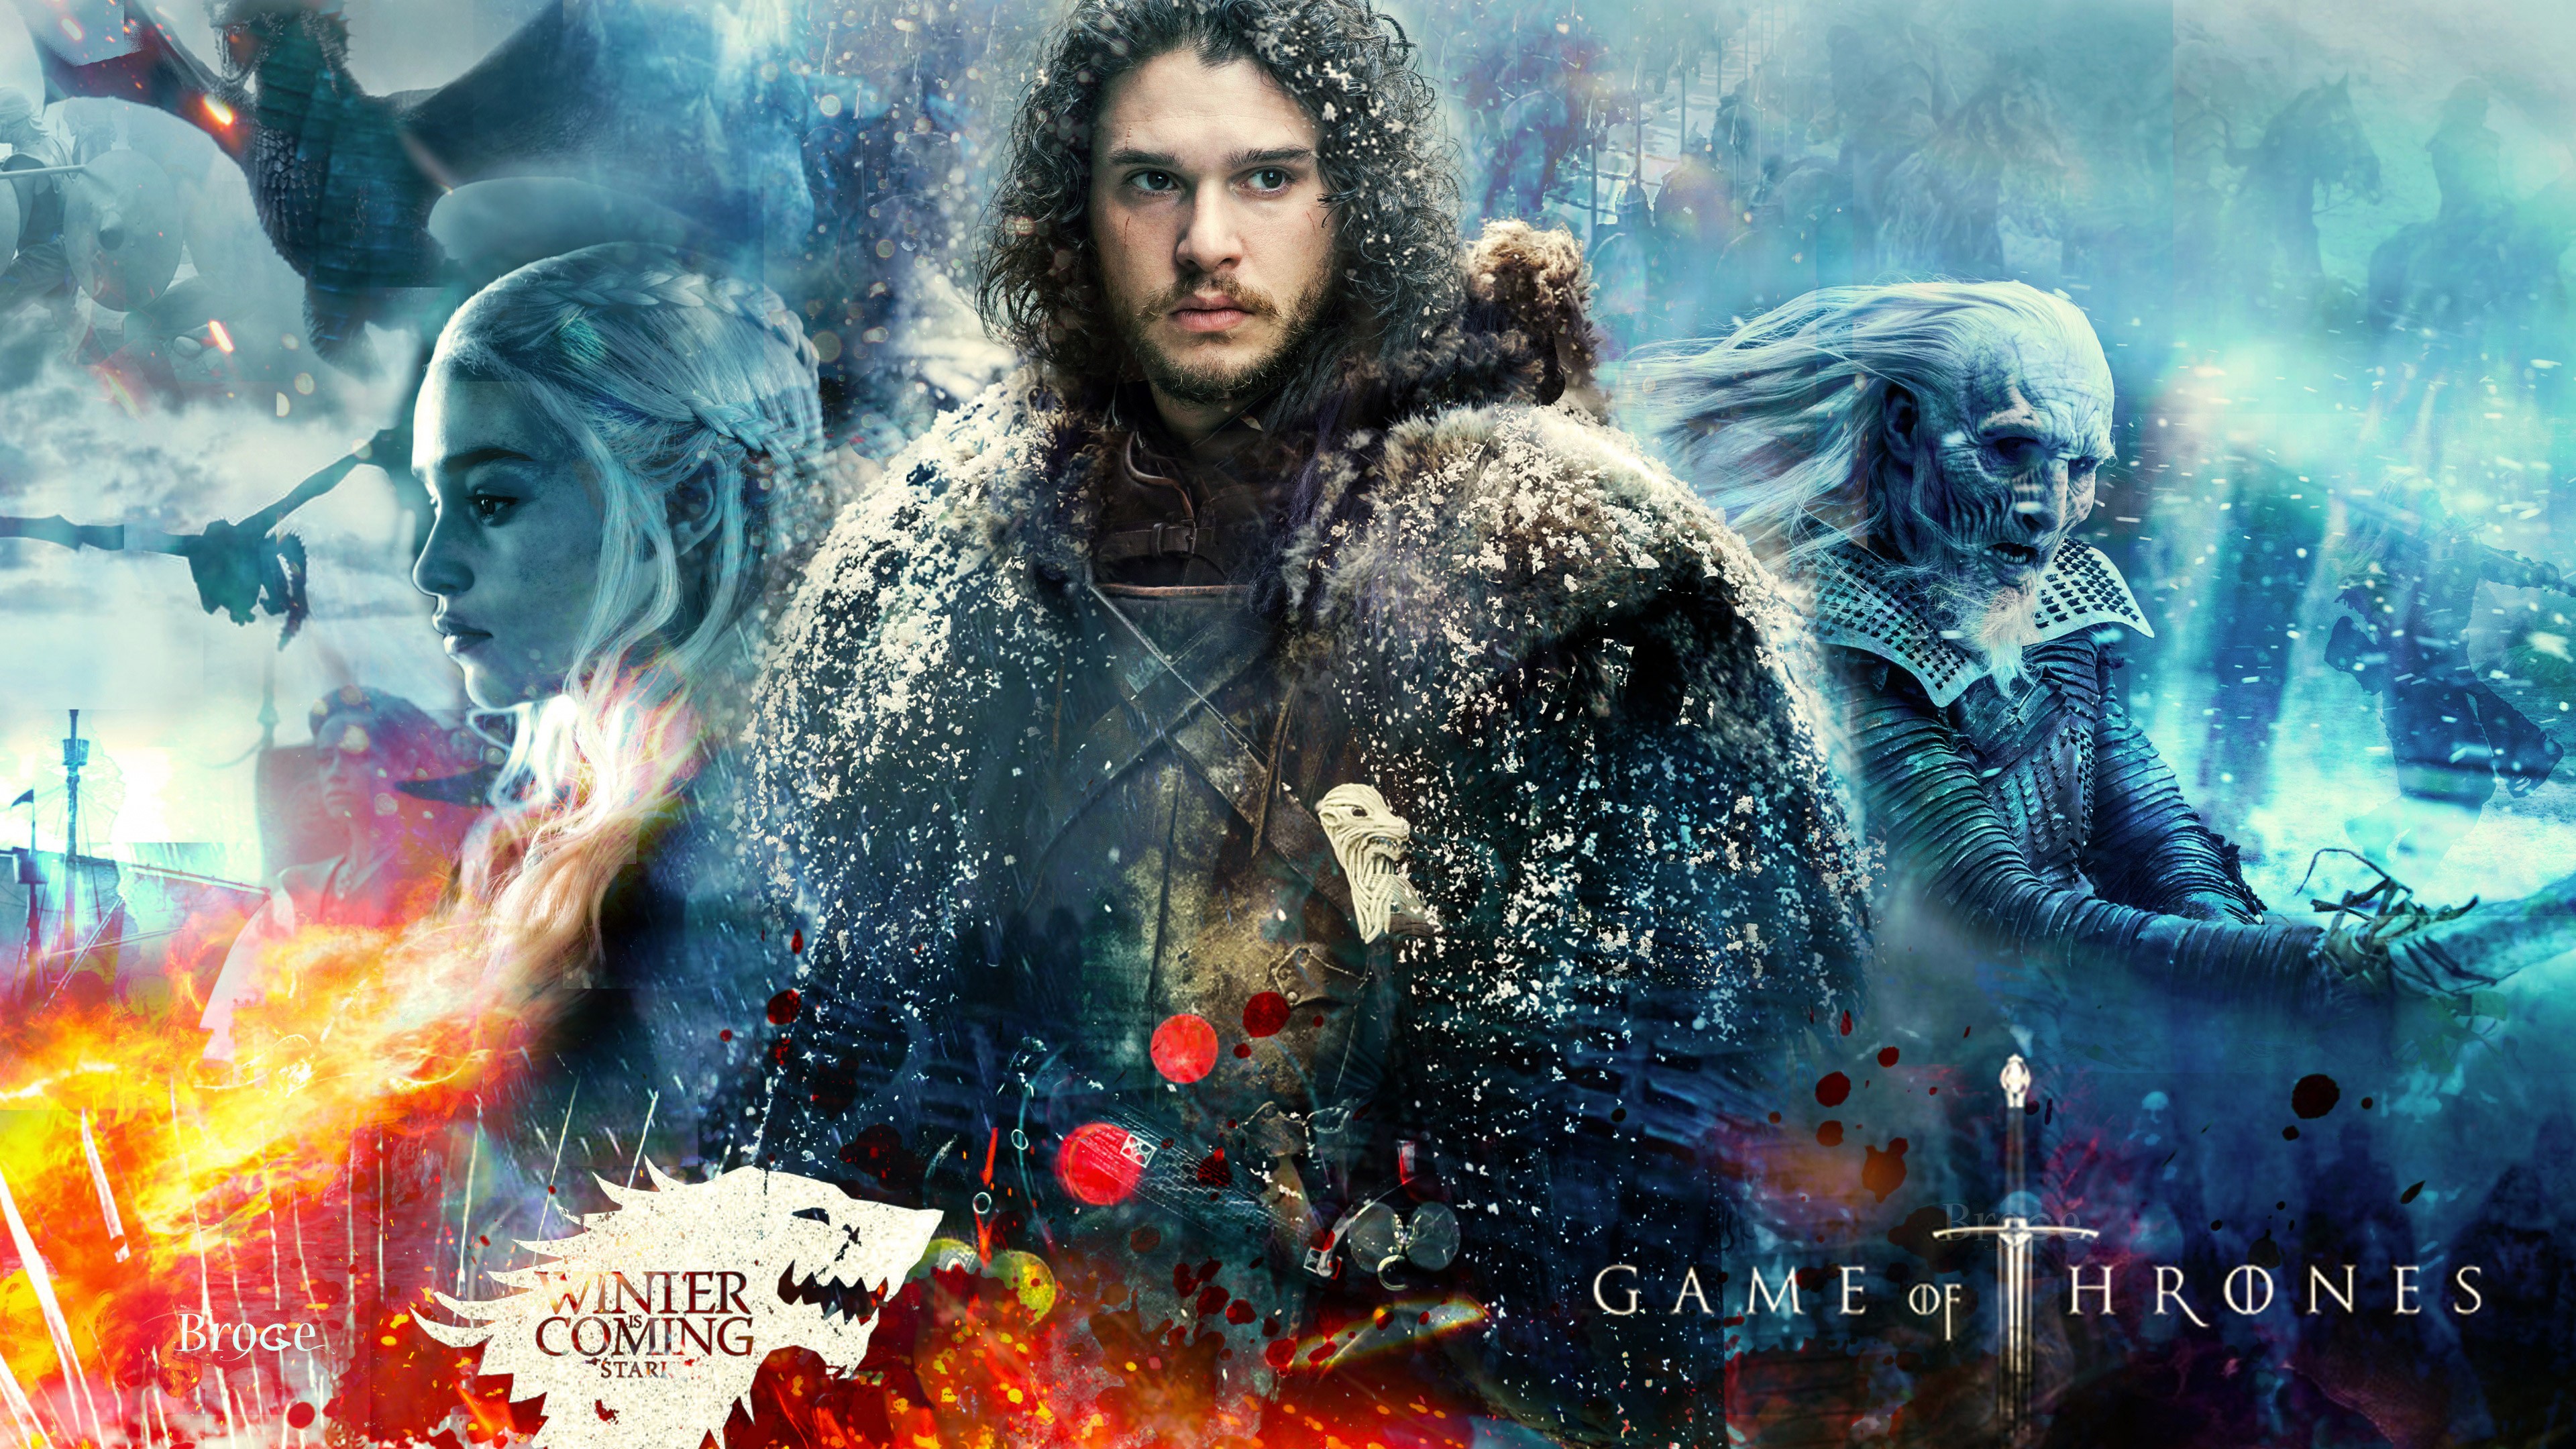 Wallpaper Game of Thrones Season 7 Jon Snow Daenerys Targaryen